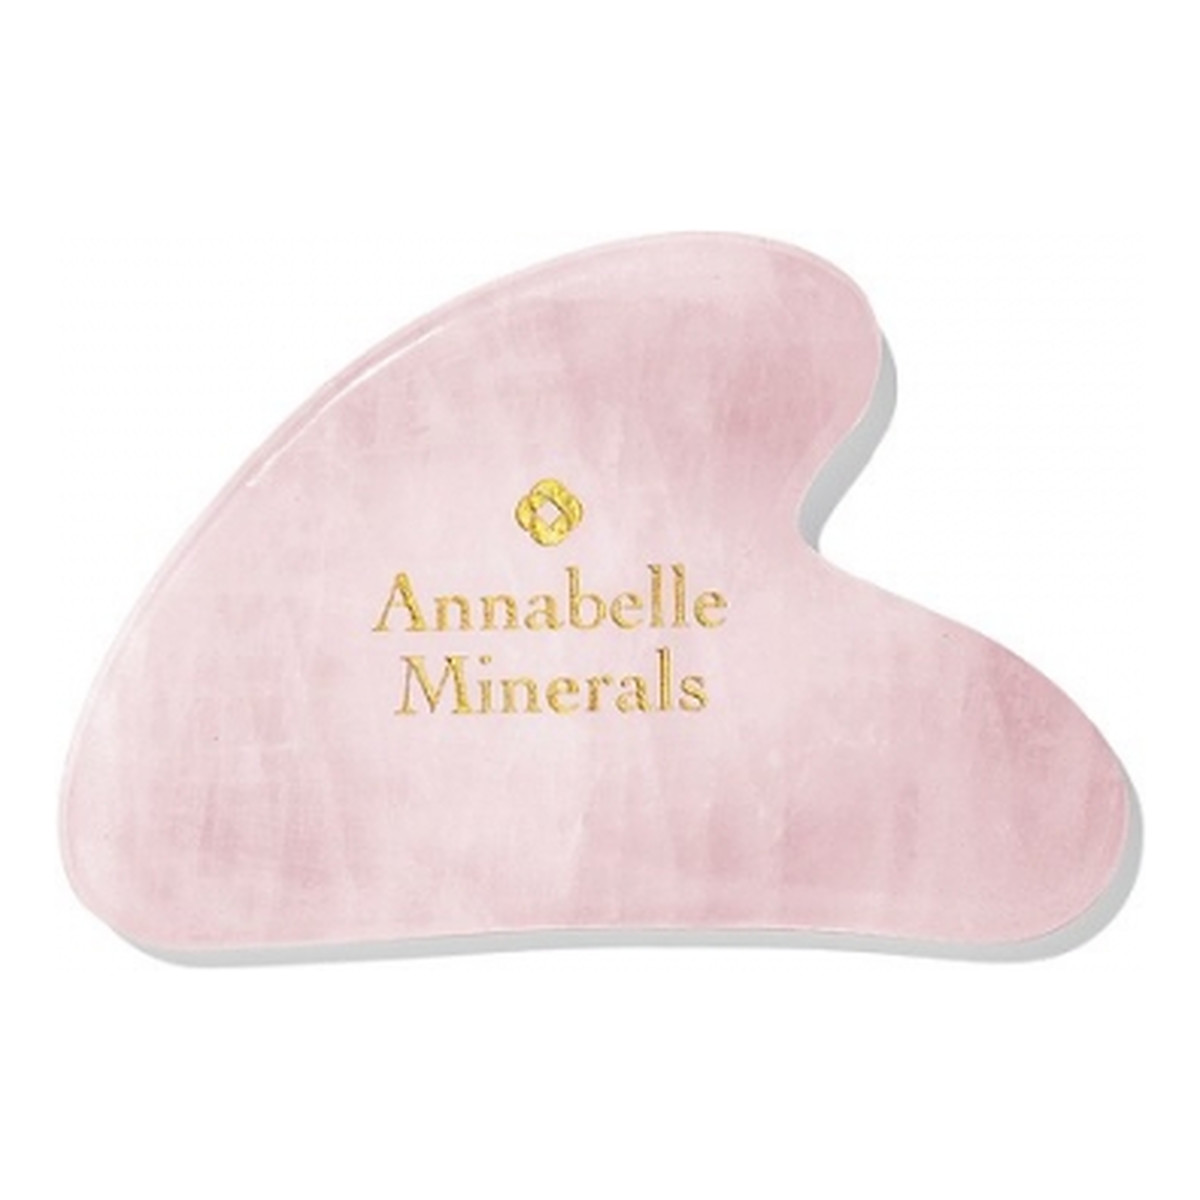 Annabelle Minerals Gua Sha Płytka do masażu twarzy